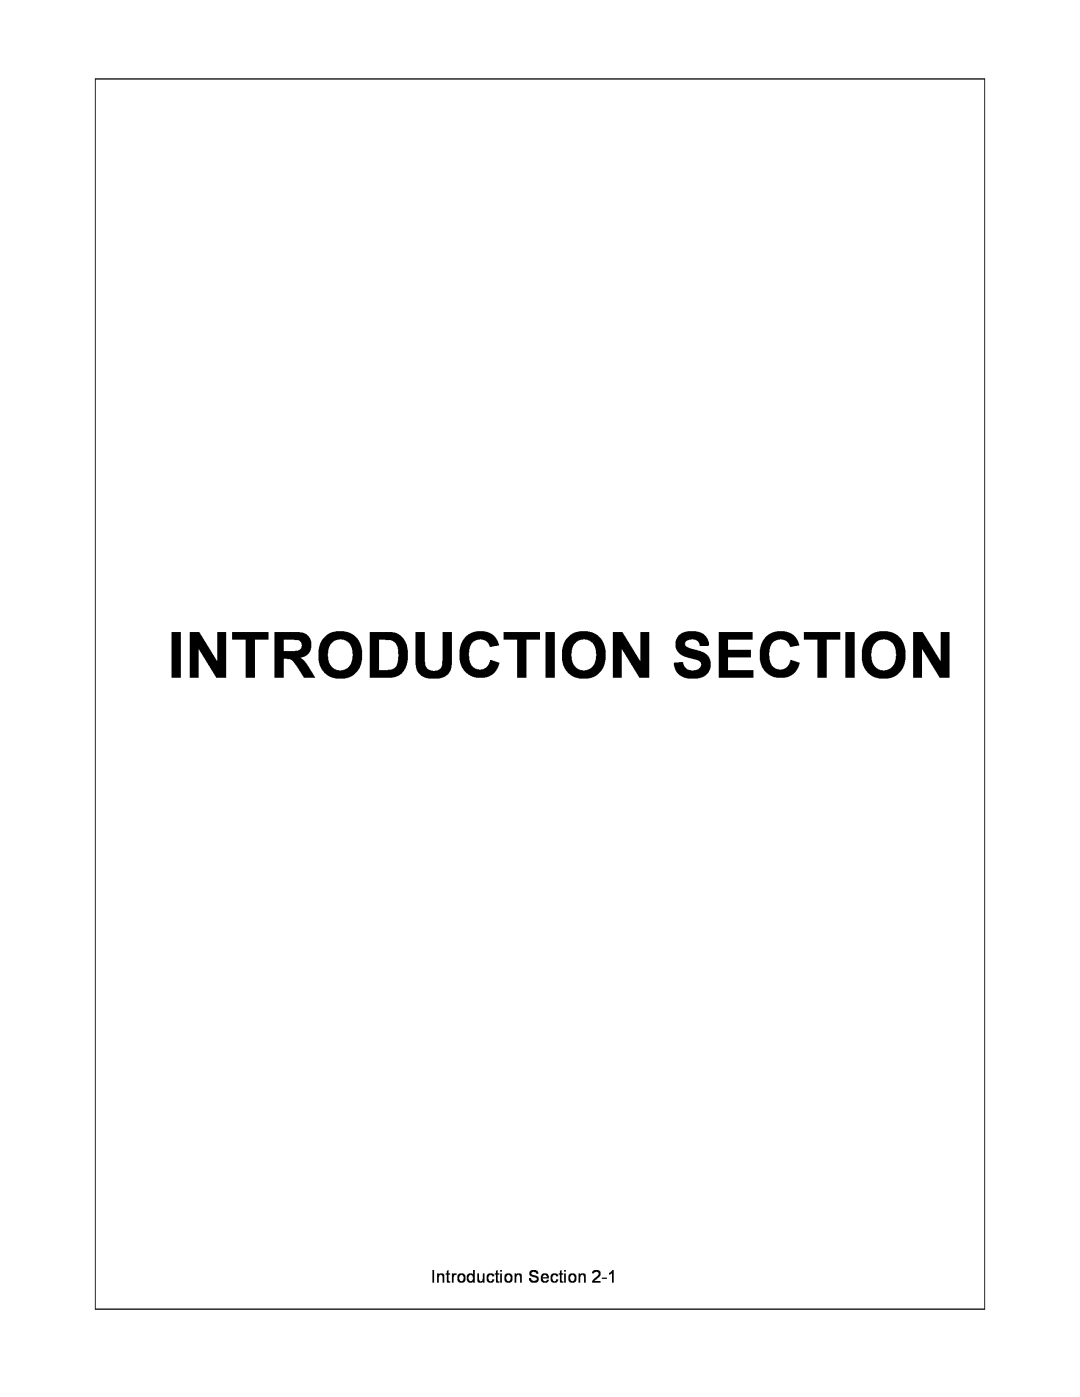 Alamo 6212 manual Introduction Section 